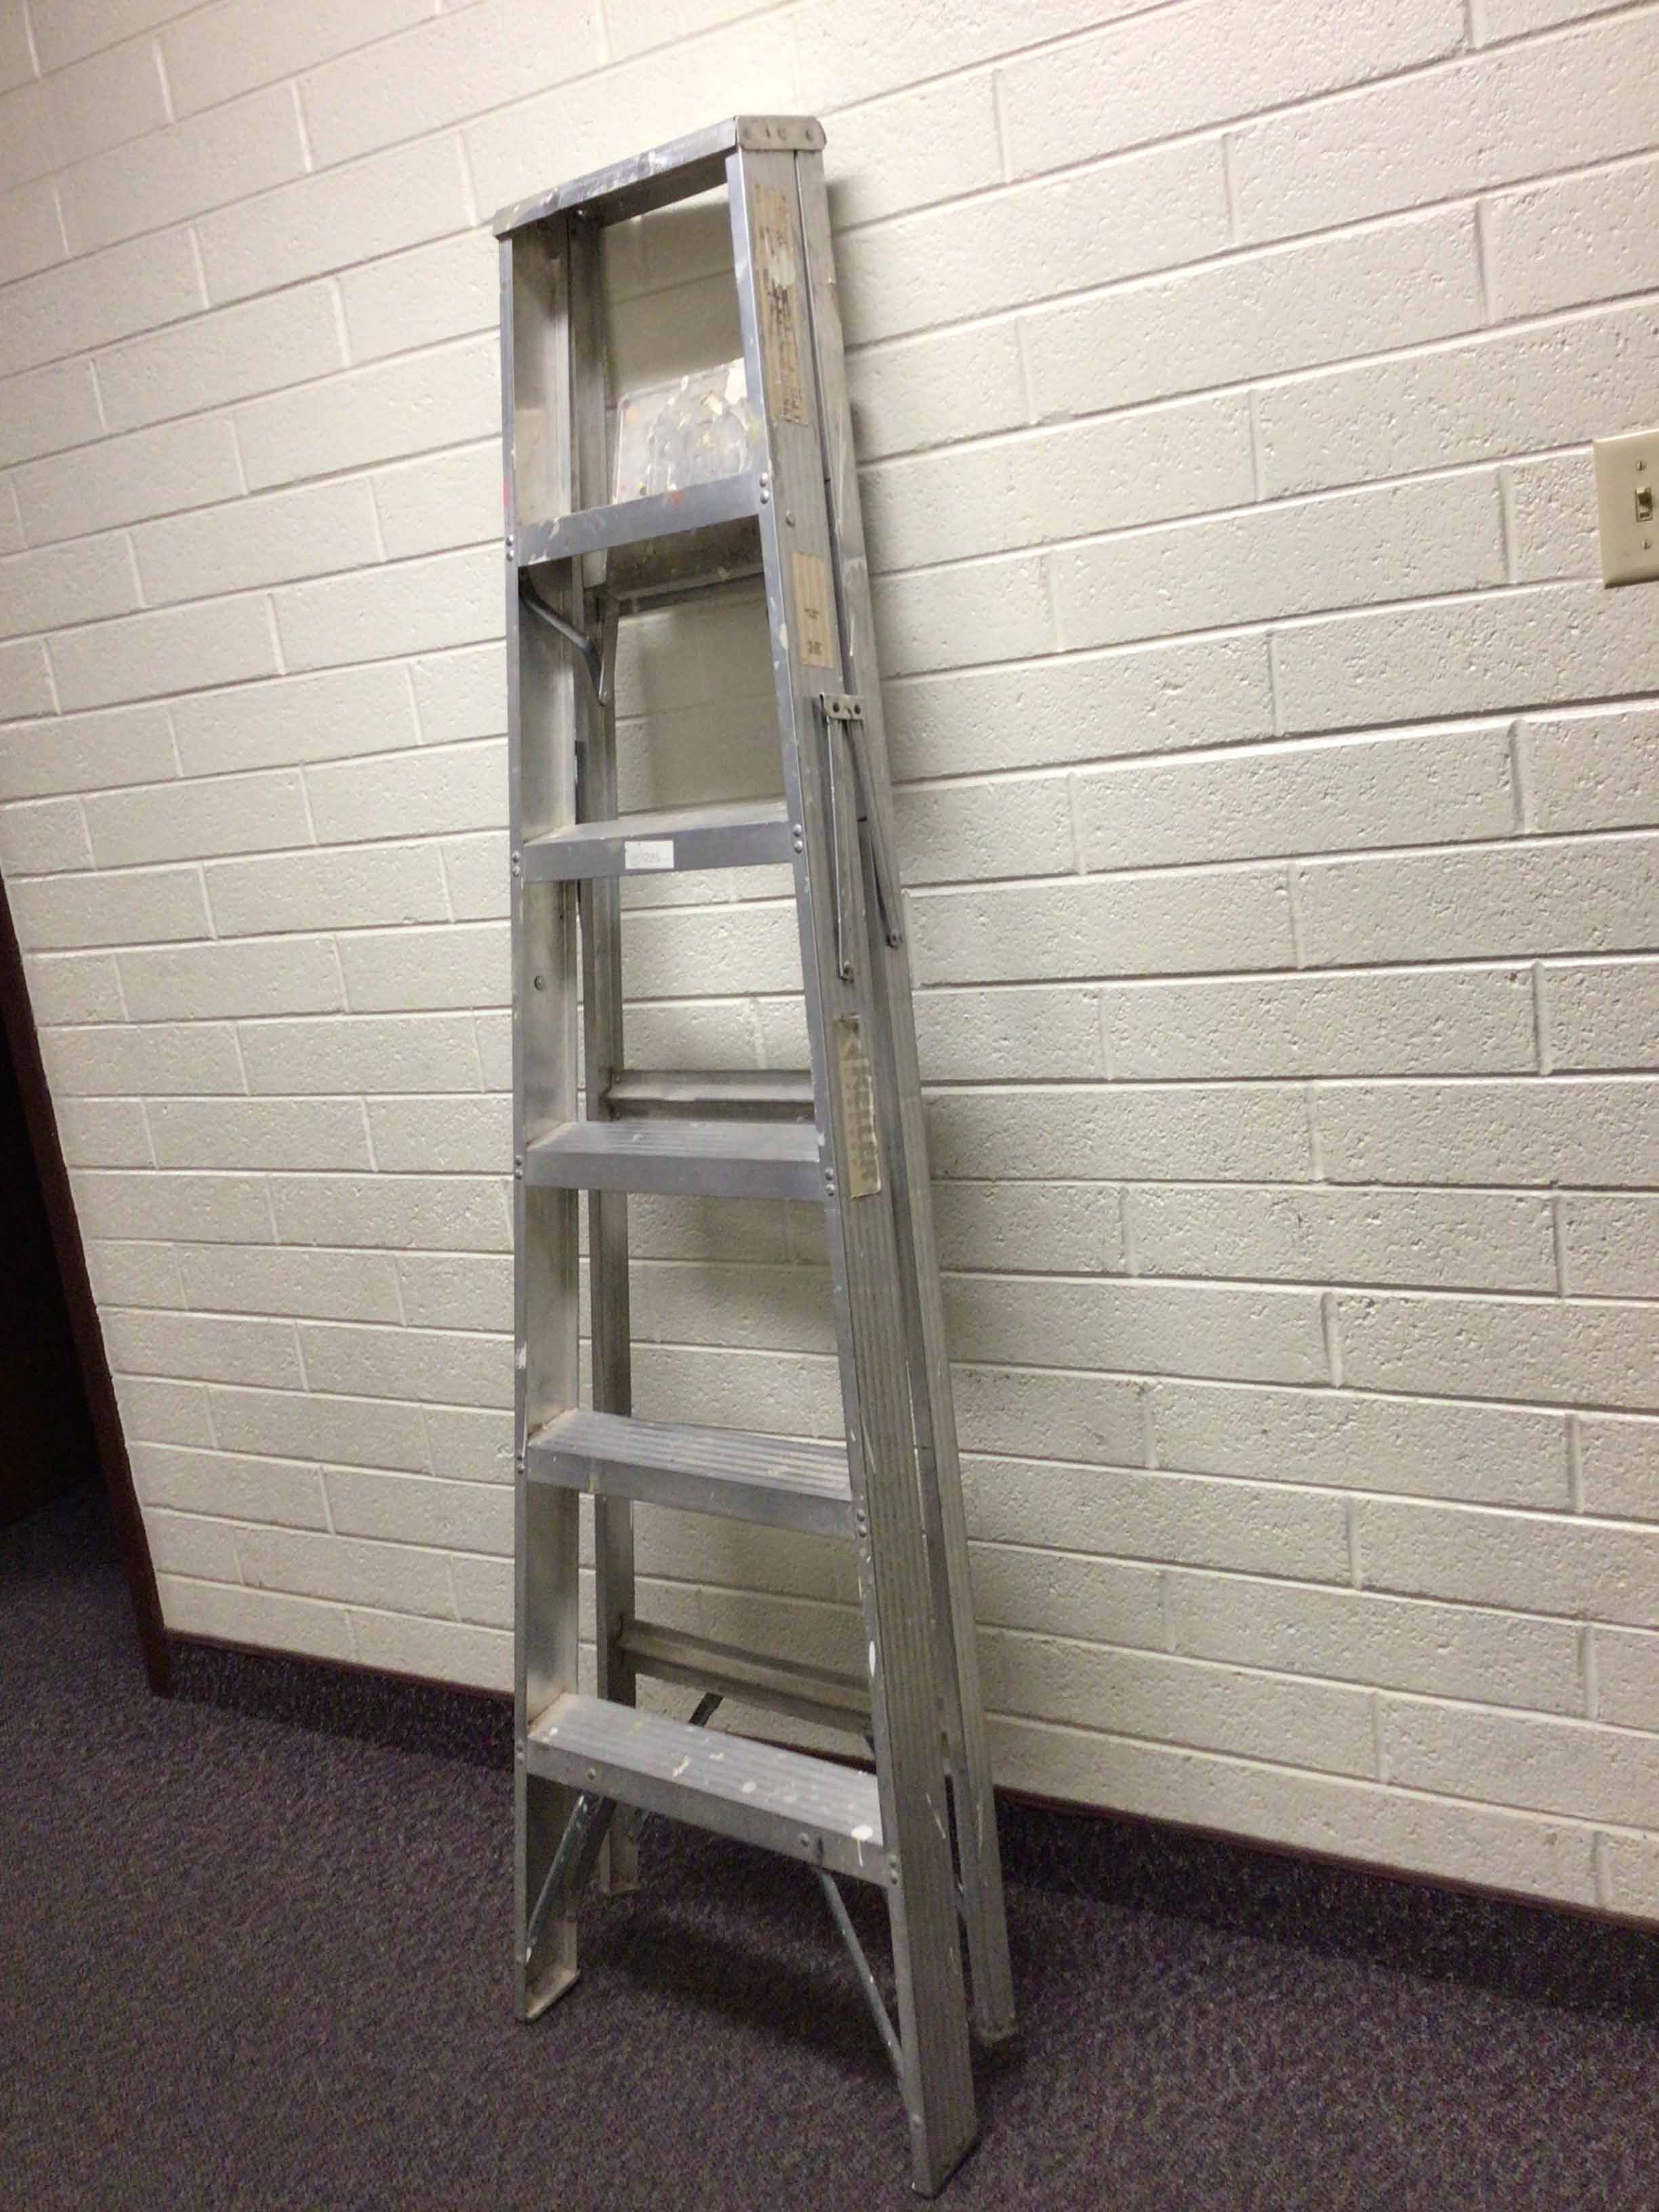 six-foot step ladder